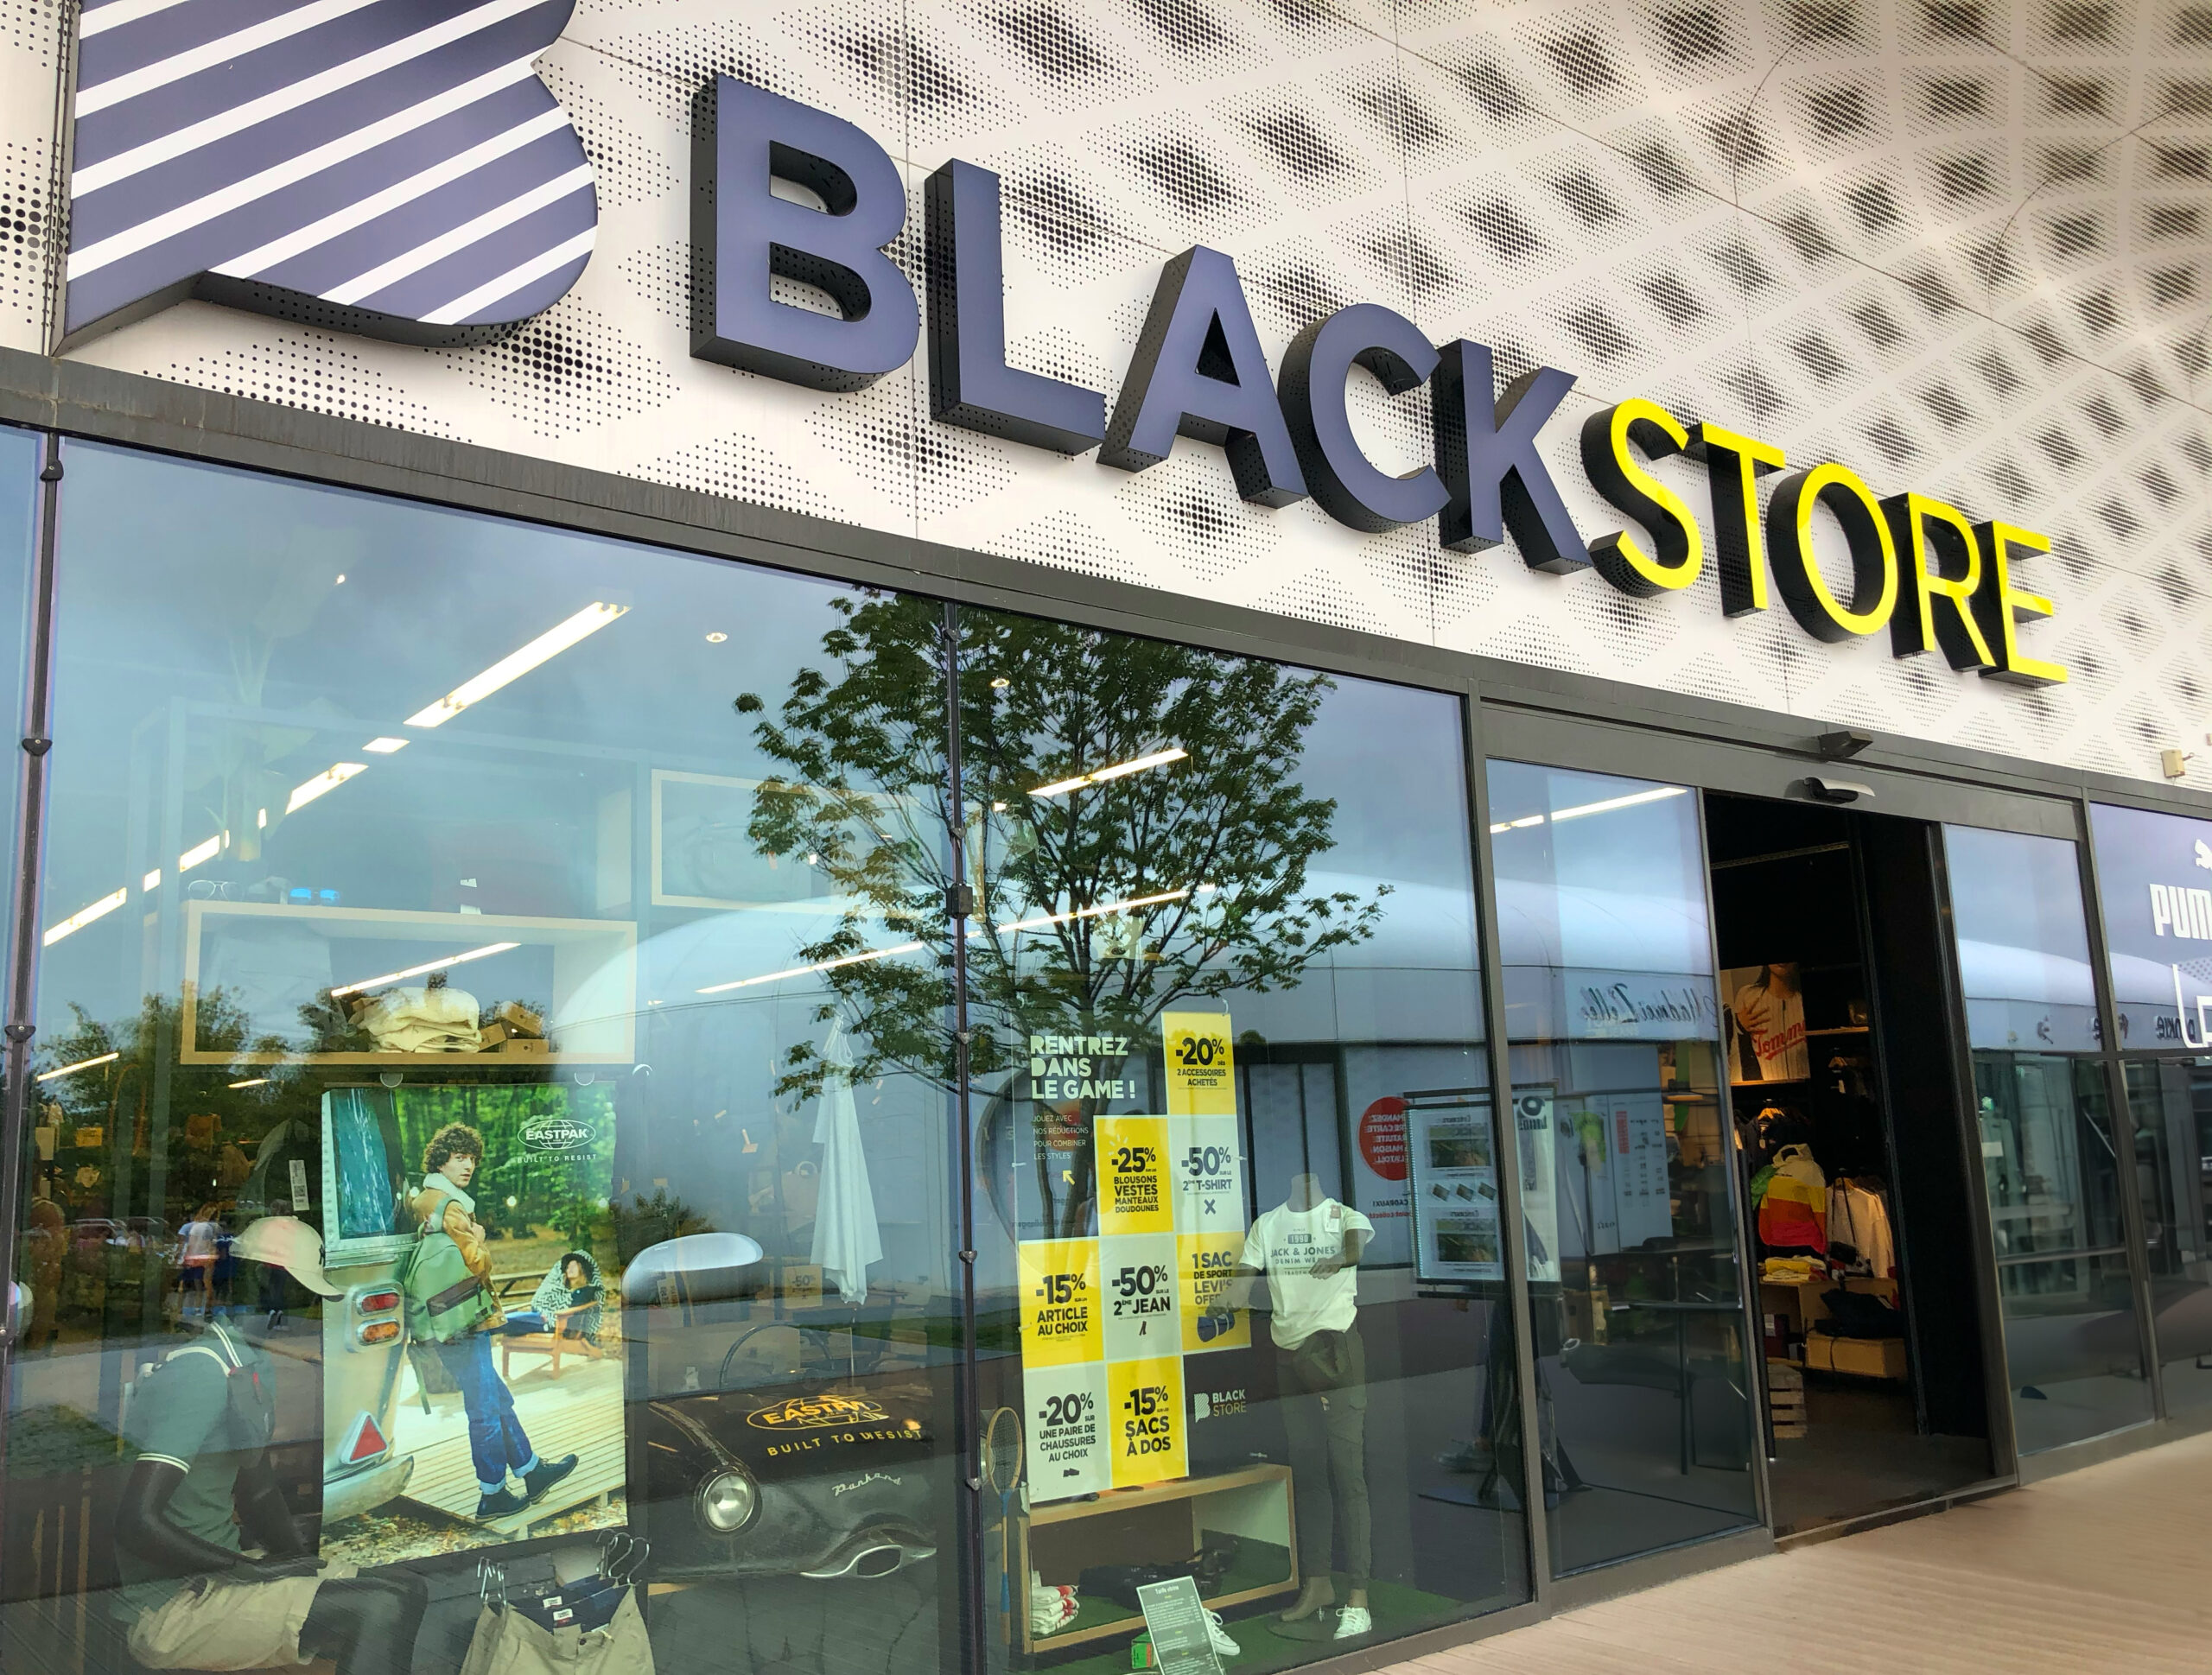 Blackstore retail store